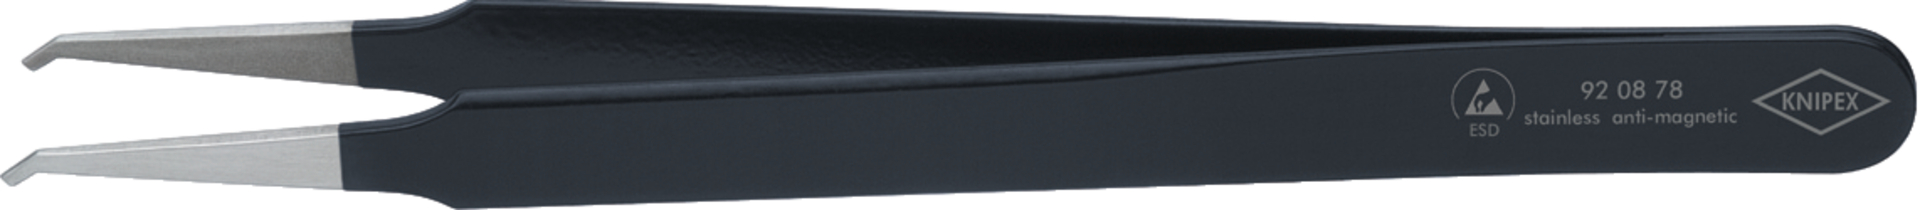 KNIPEX 92 08 78 ESD SMD-Präzisionspinzette Glatt 118 mm